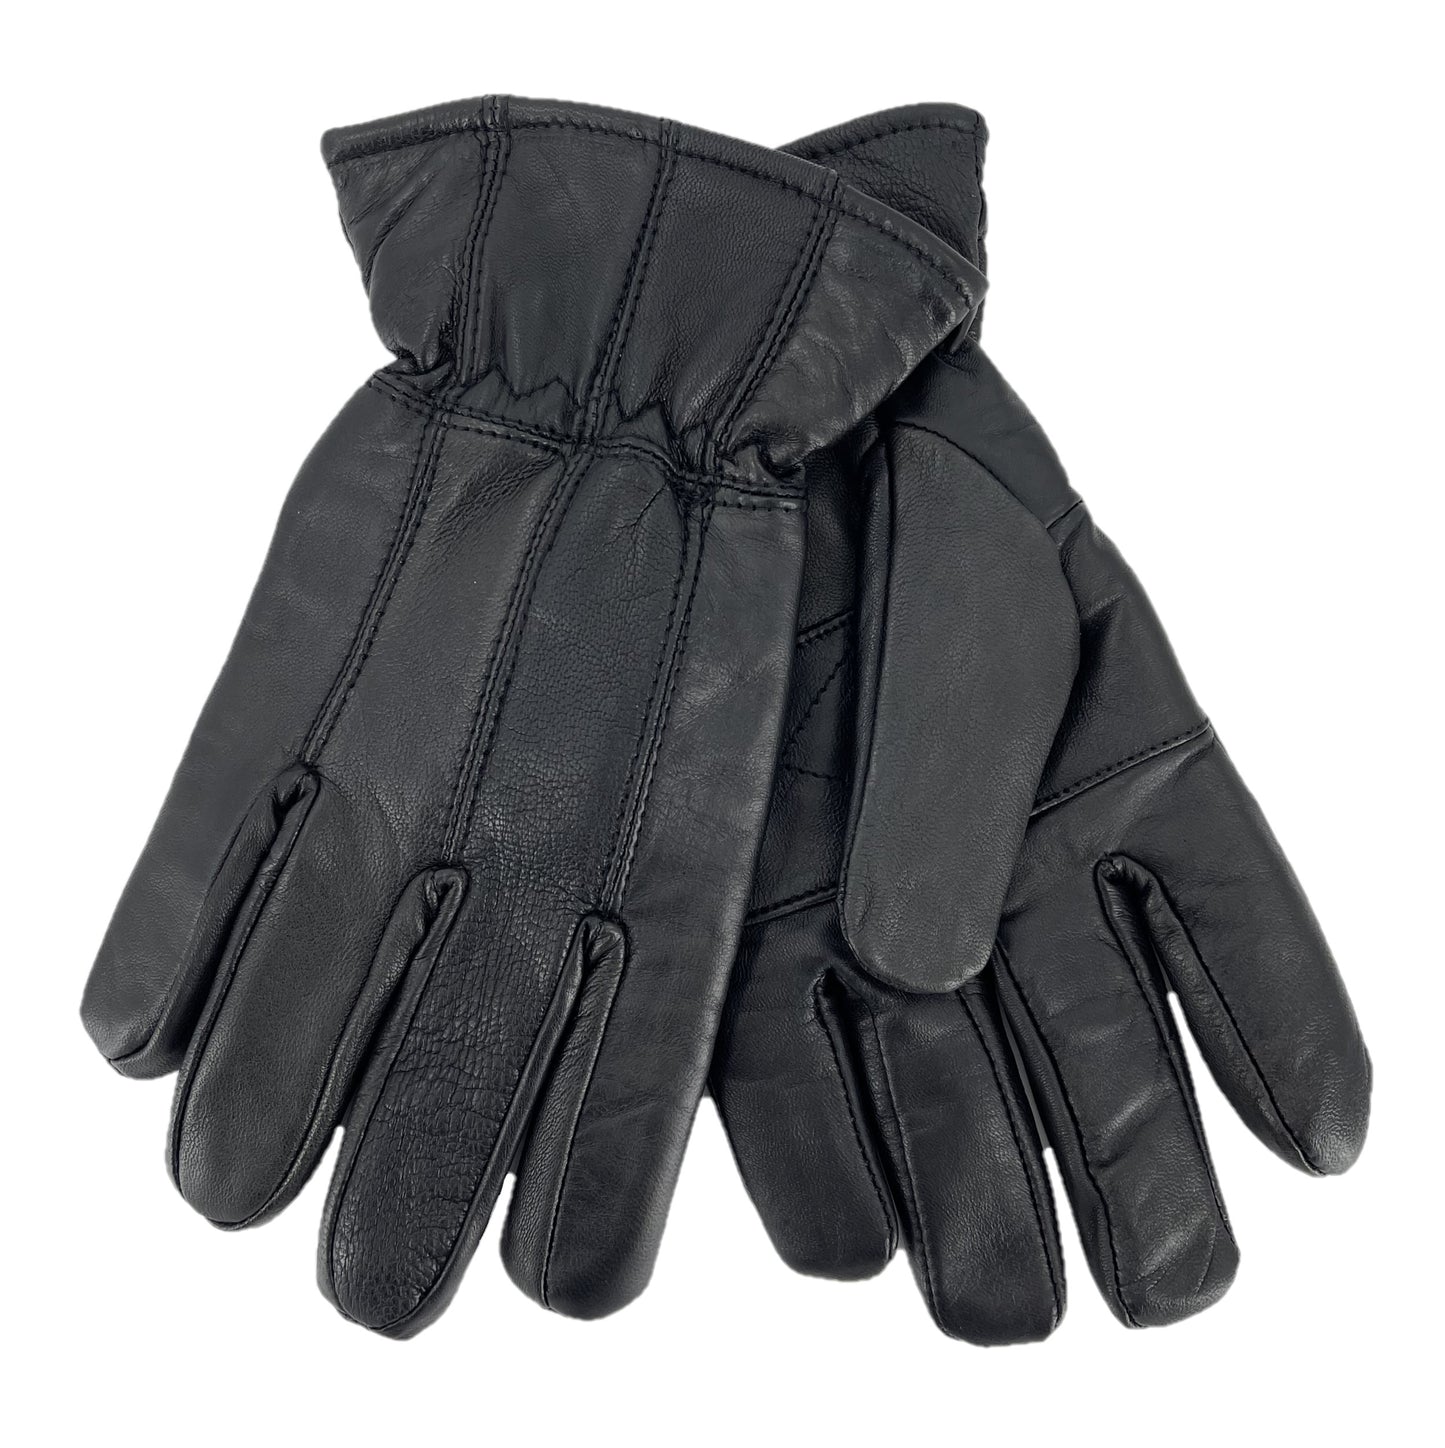 Men's Super Soft Warm Black Sheepskin Leather Gloves with Warm Fleece Lining